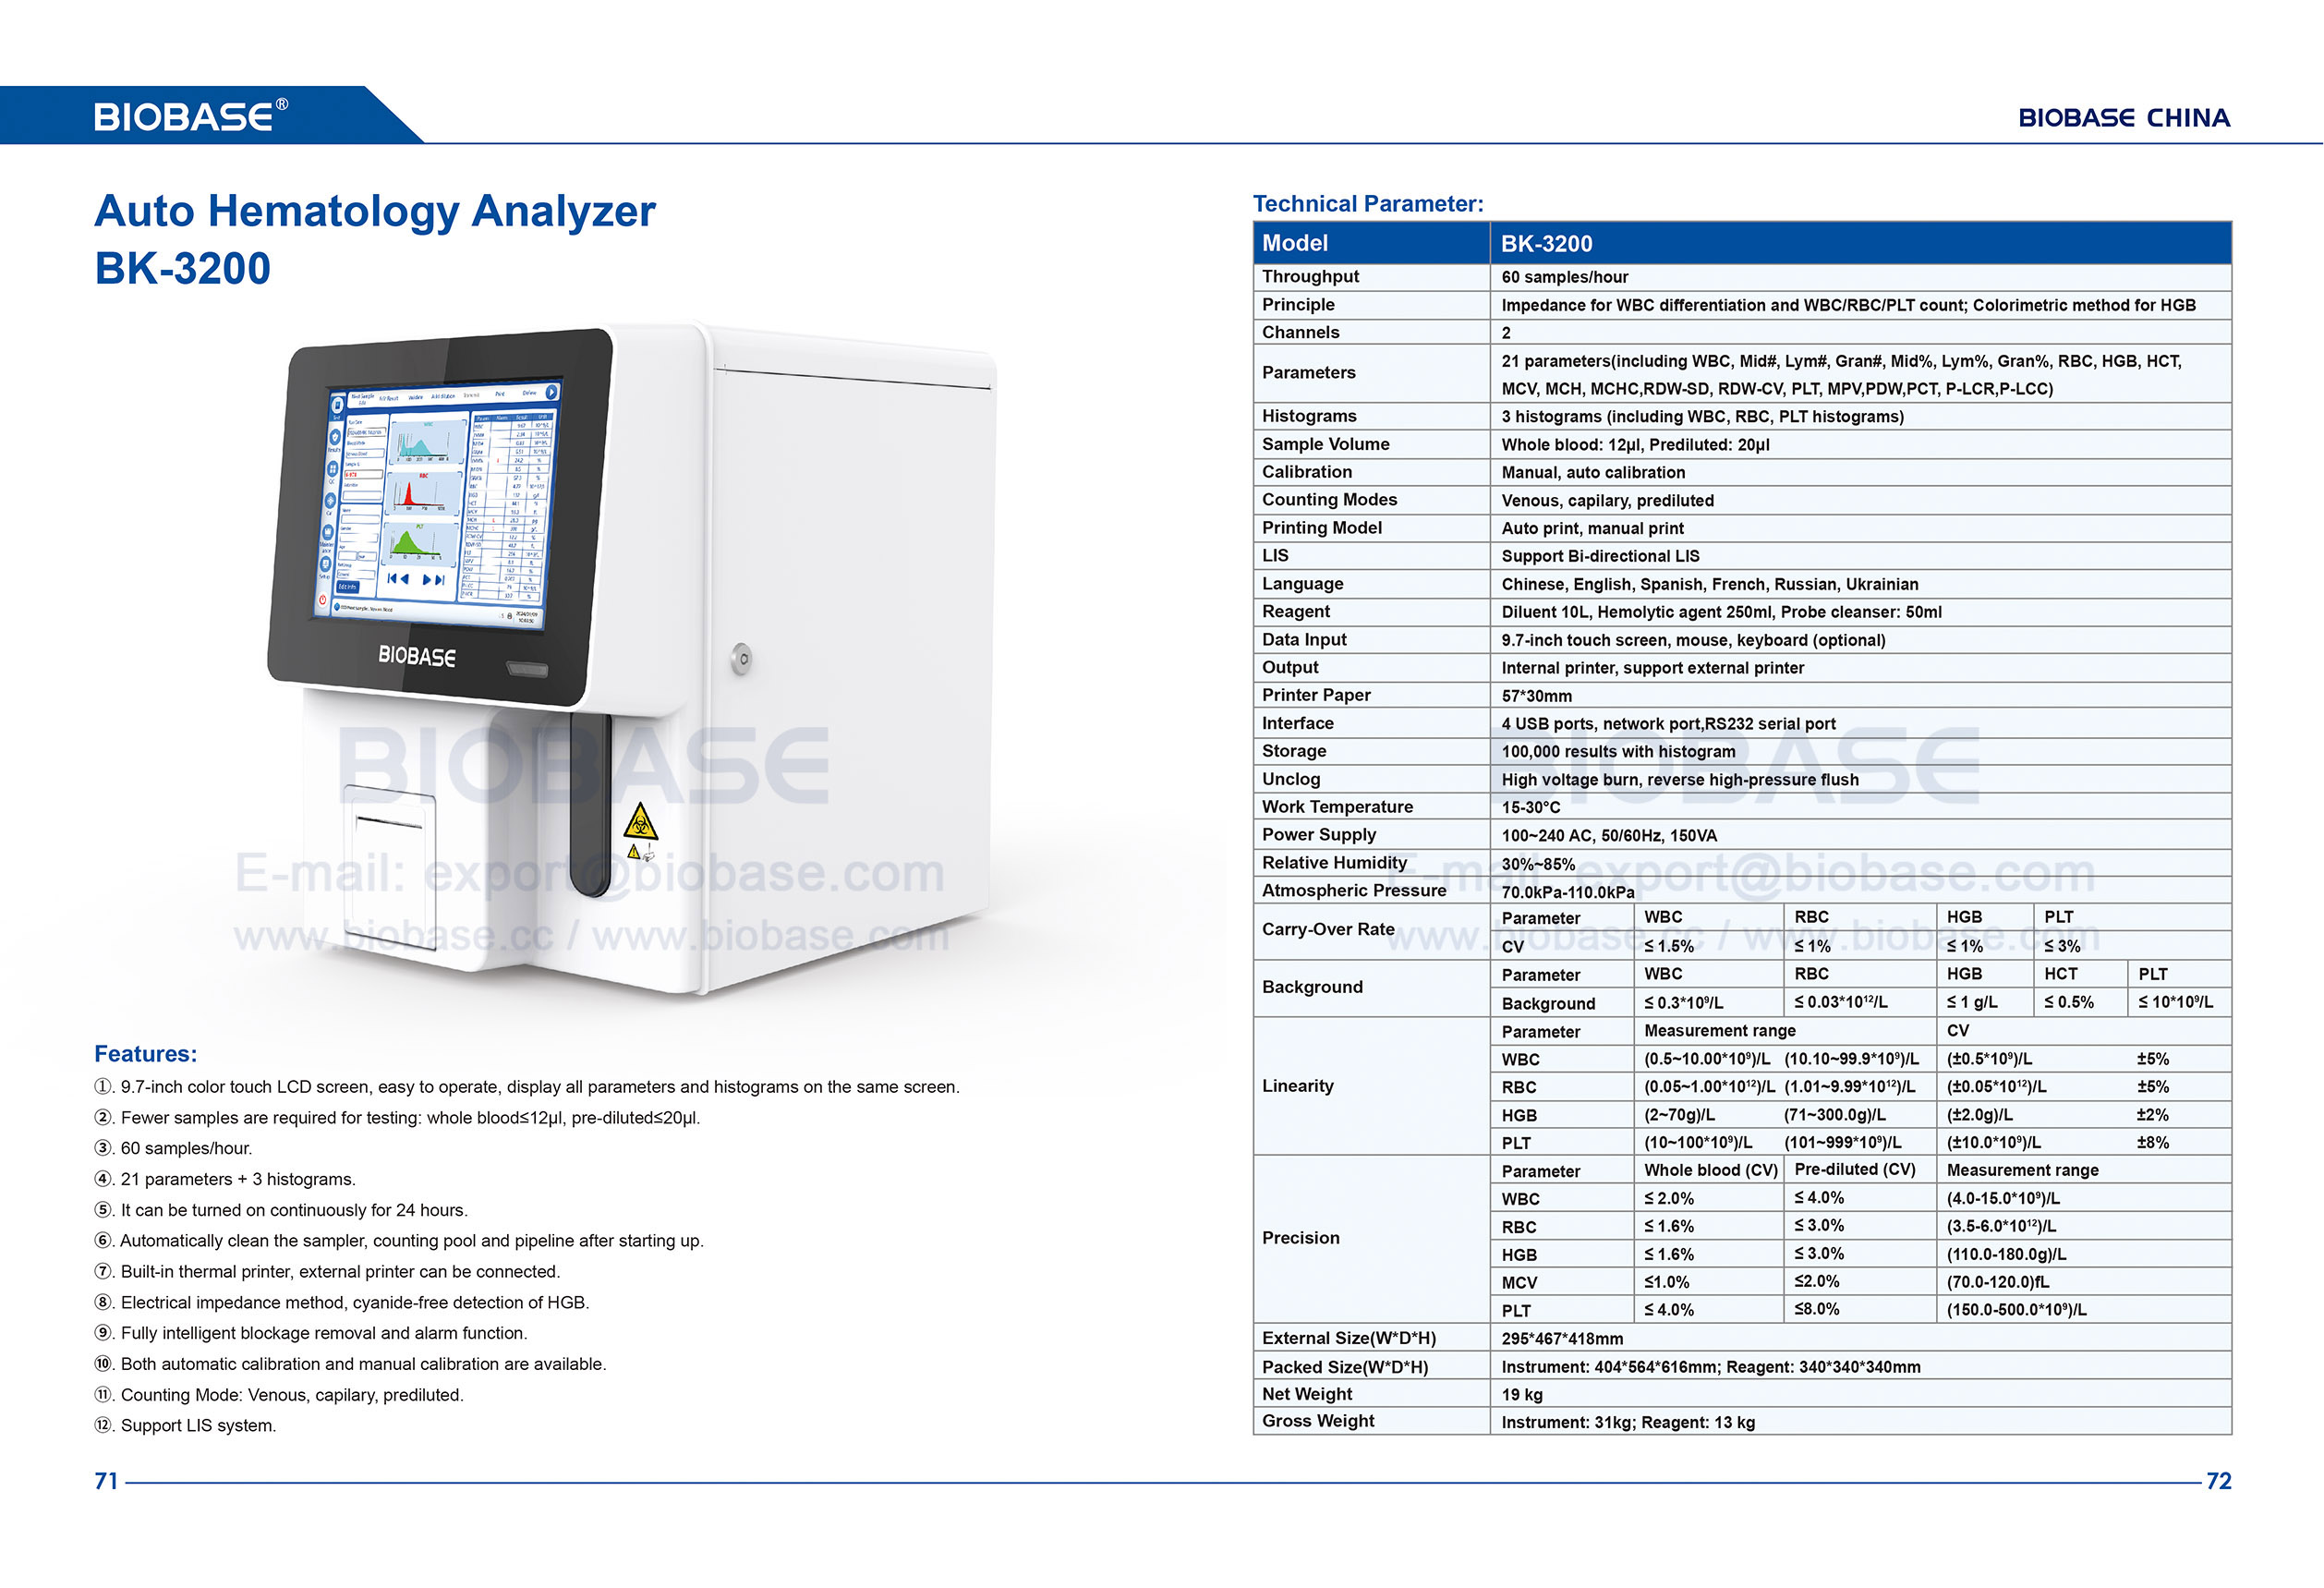 71-72 Auto Hematology Analyzer BK-3200